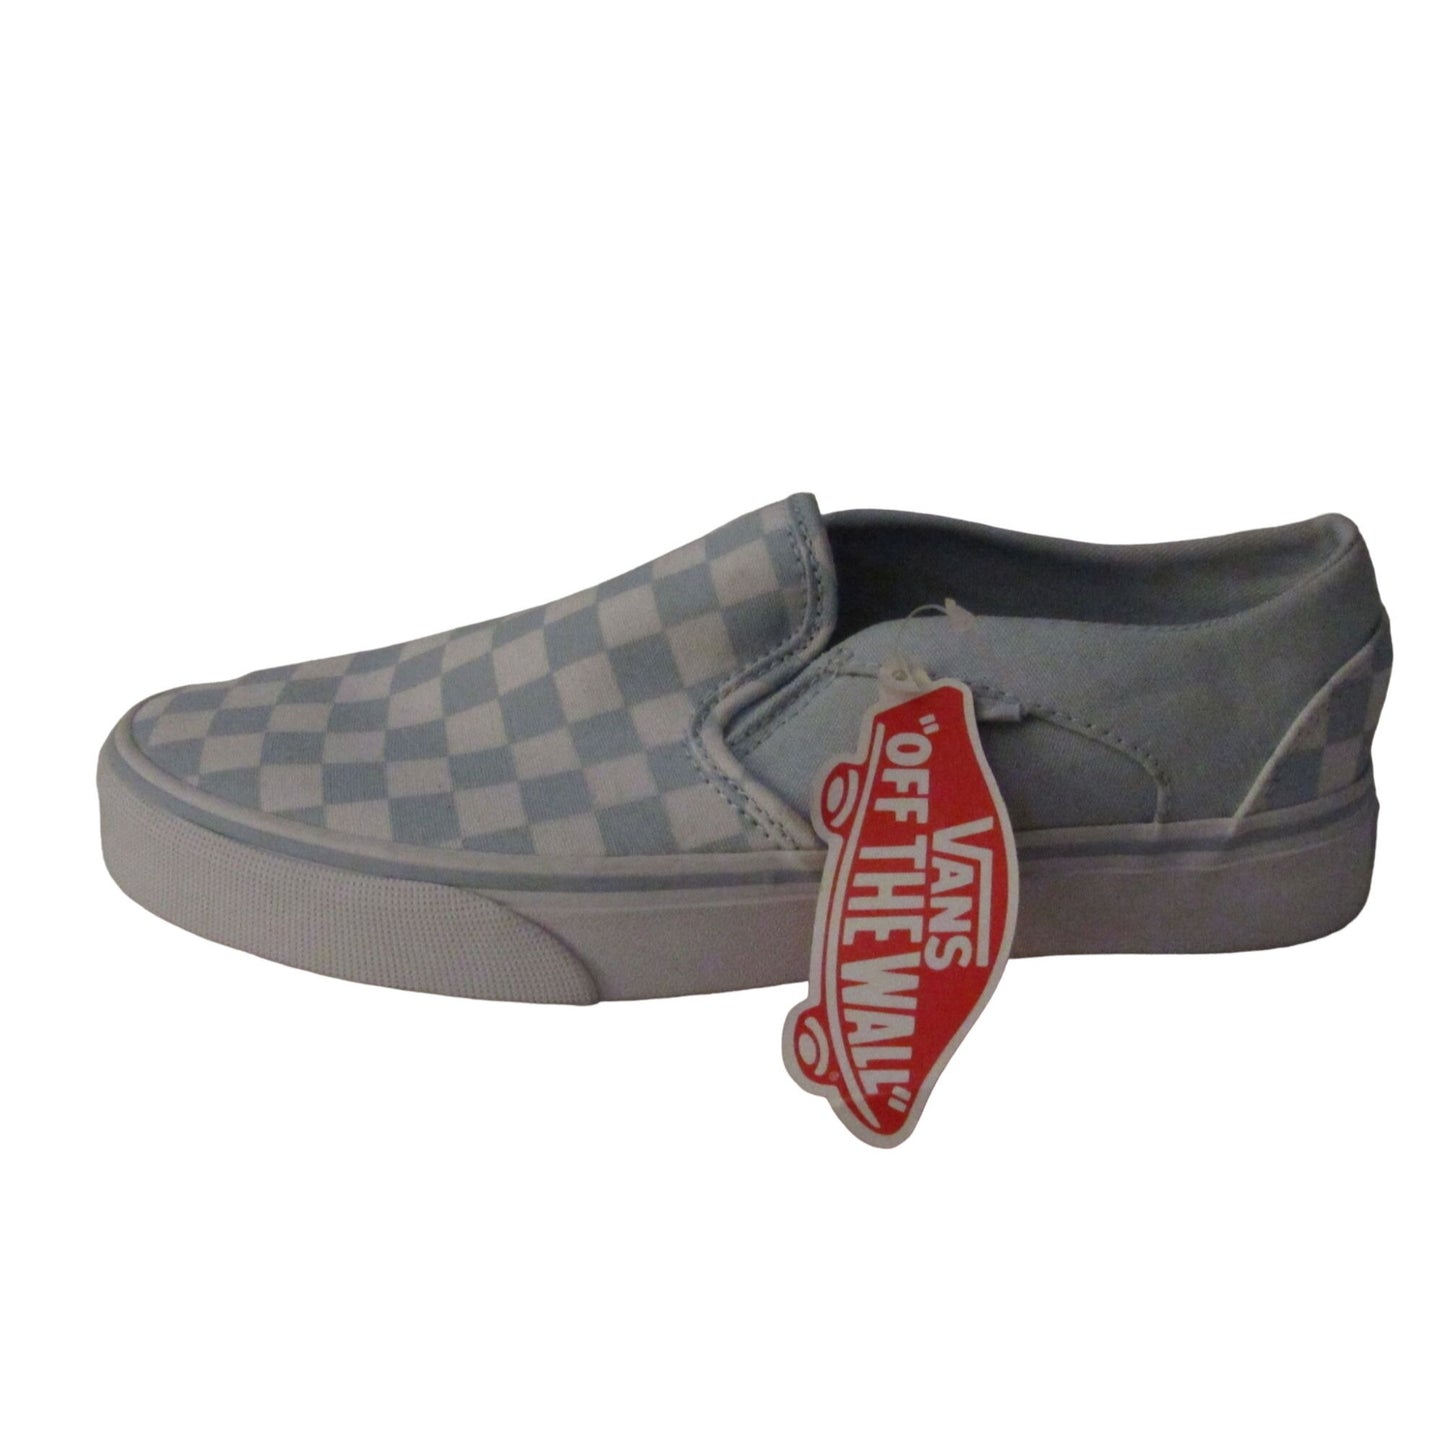 Vans Blue & White Checkerboard Slip-on Shoe Sneakers